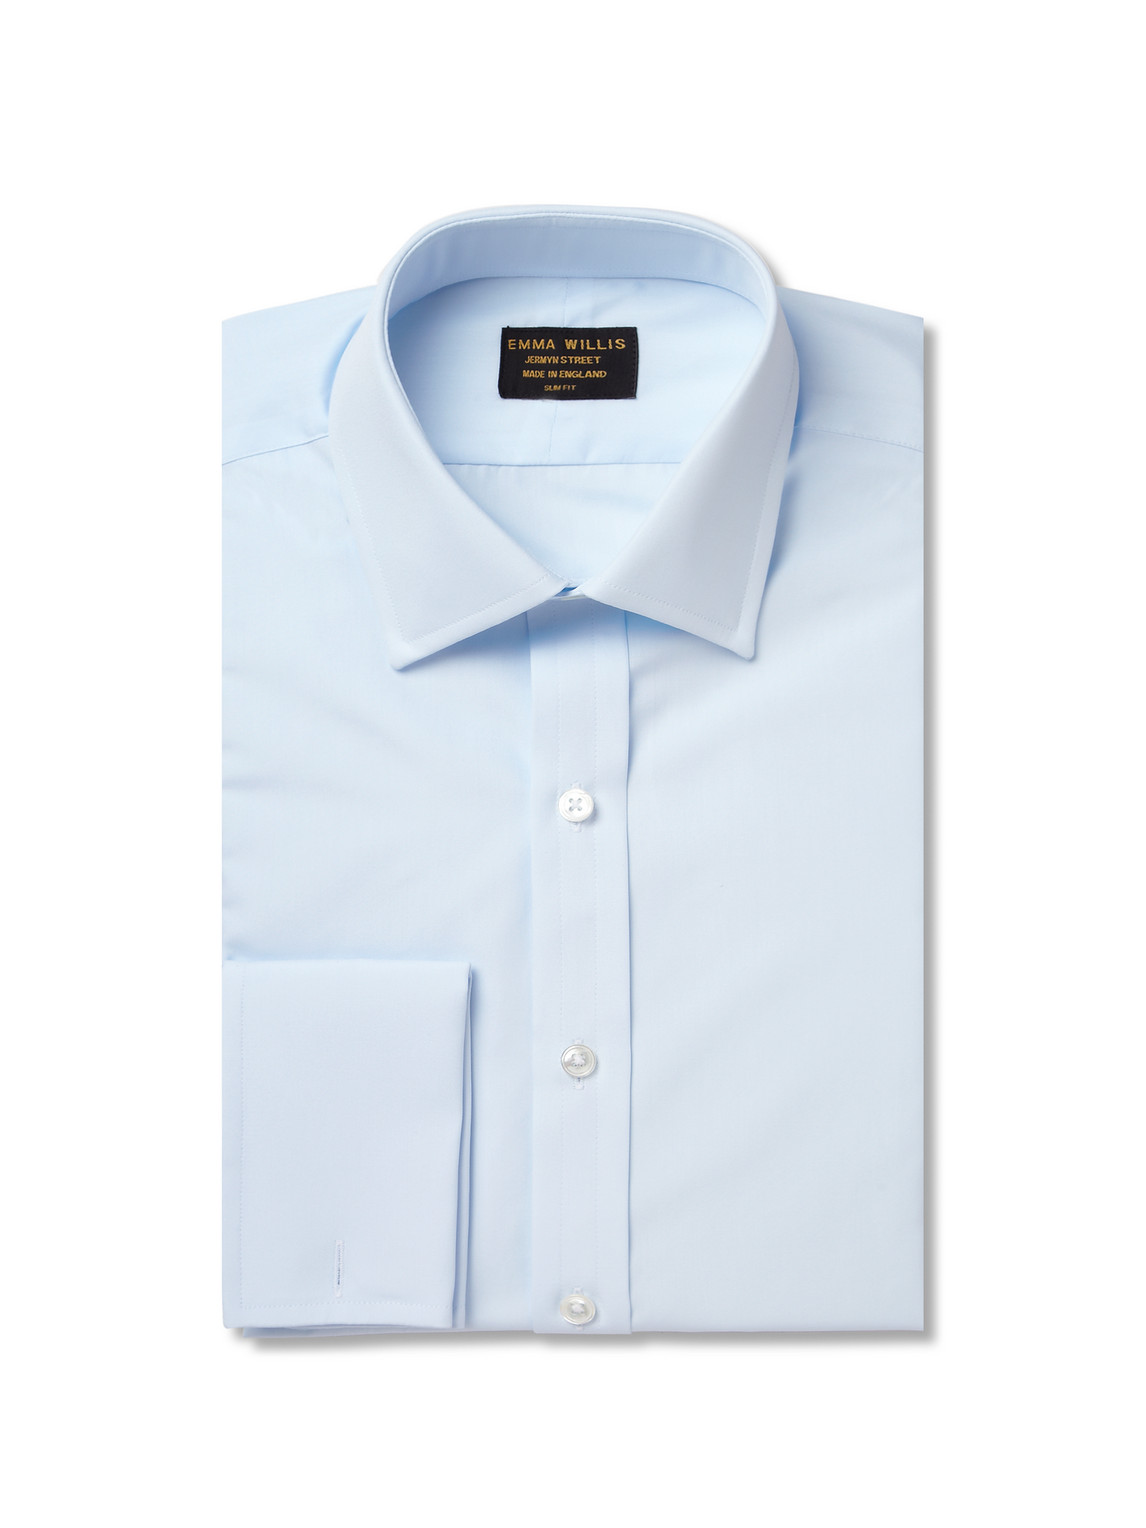 Blue Double-Cuff Cotton Shirt